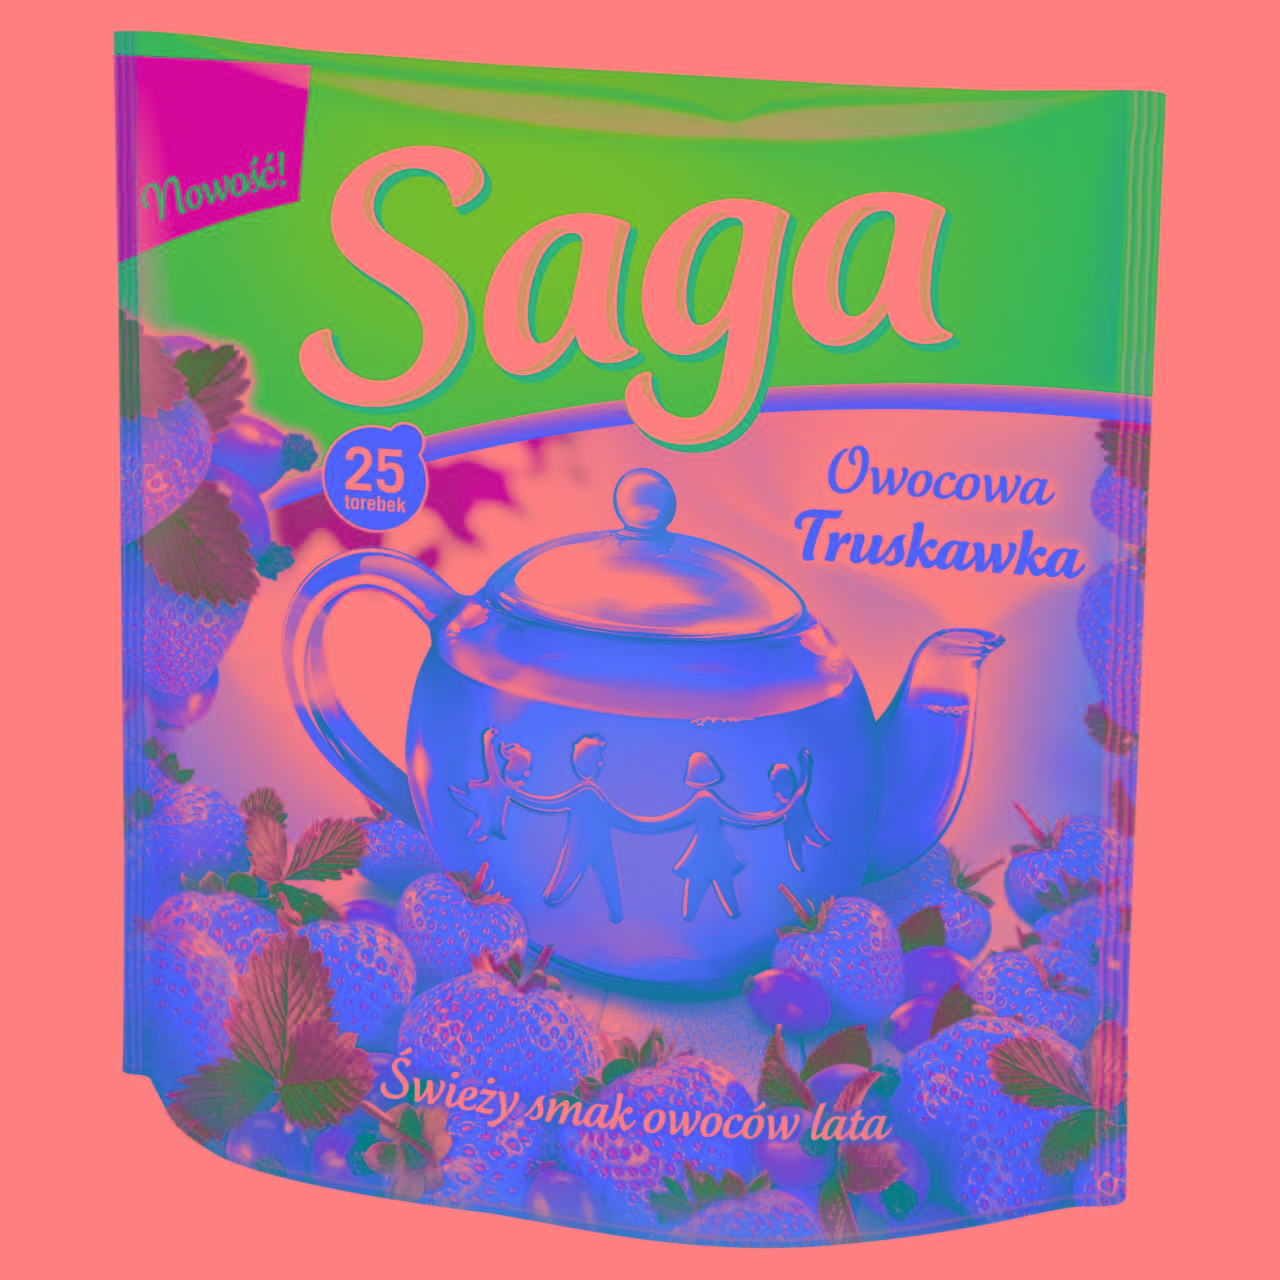 Zdjęcia - Saga Owocowa truskawka Herbatka 45 g (25 torebek)